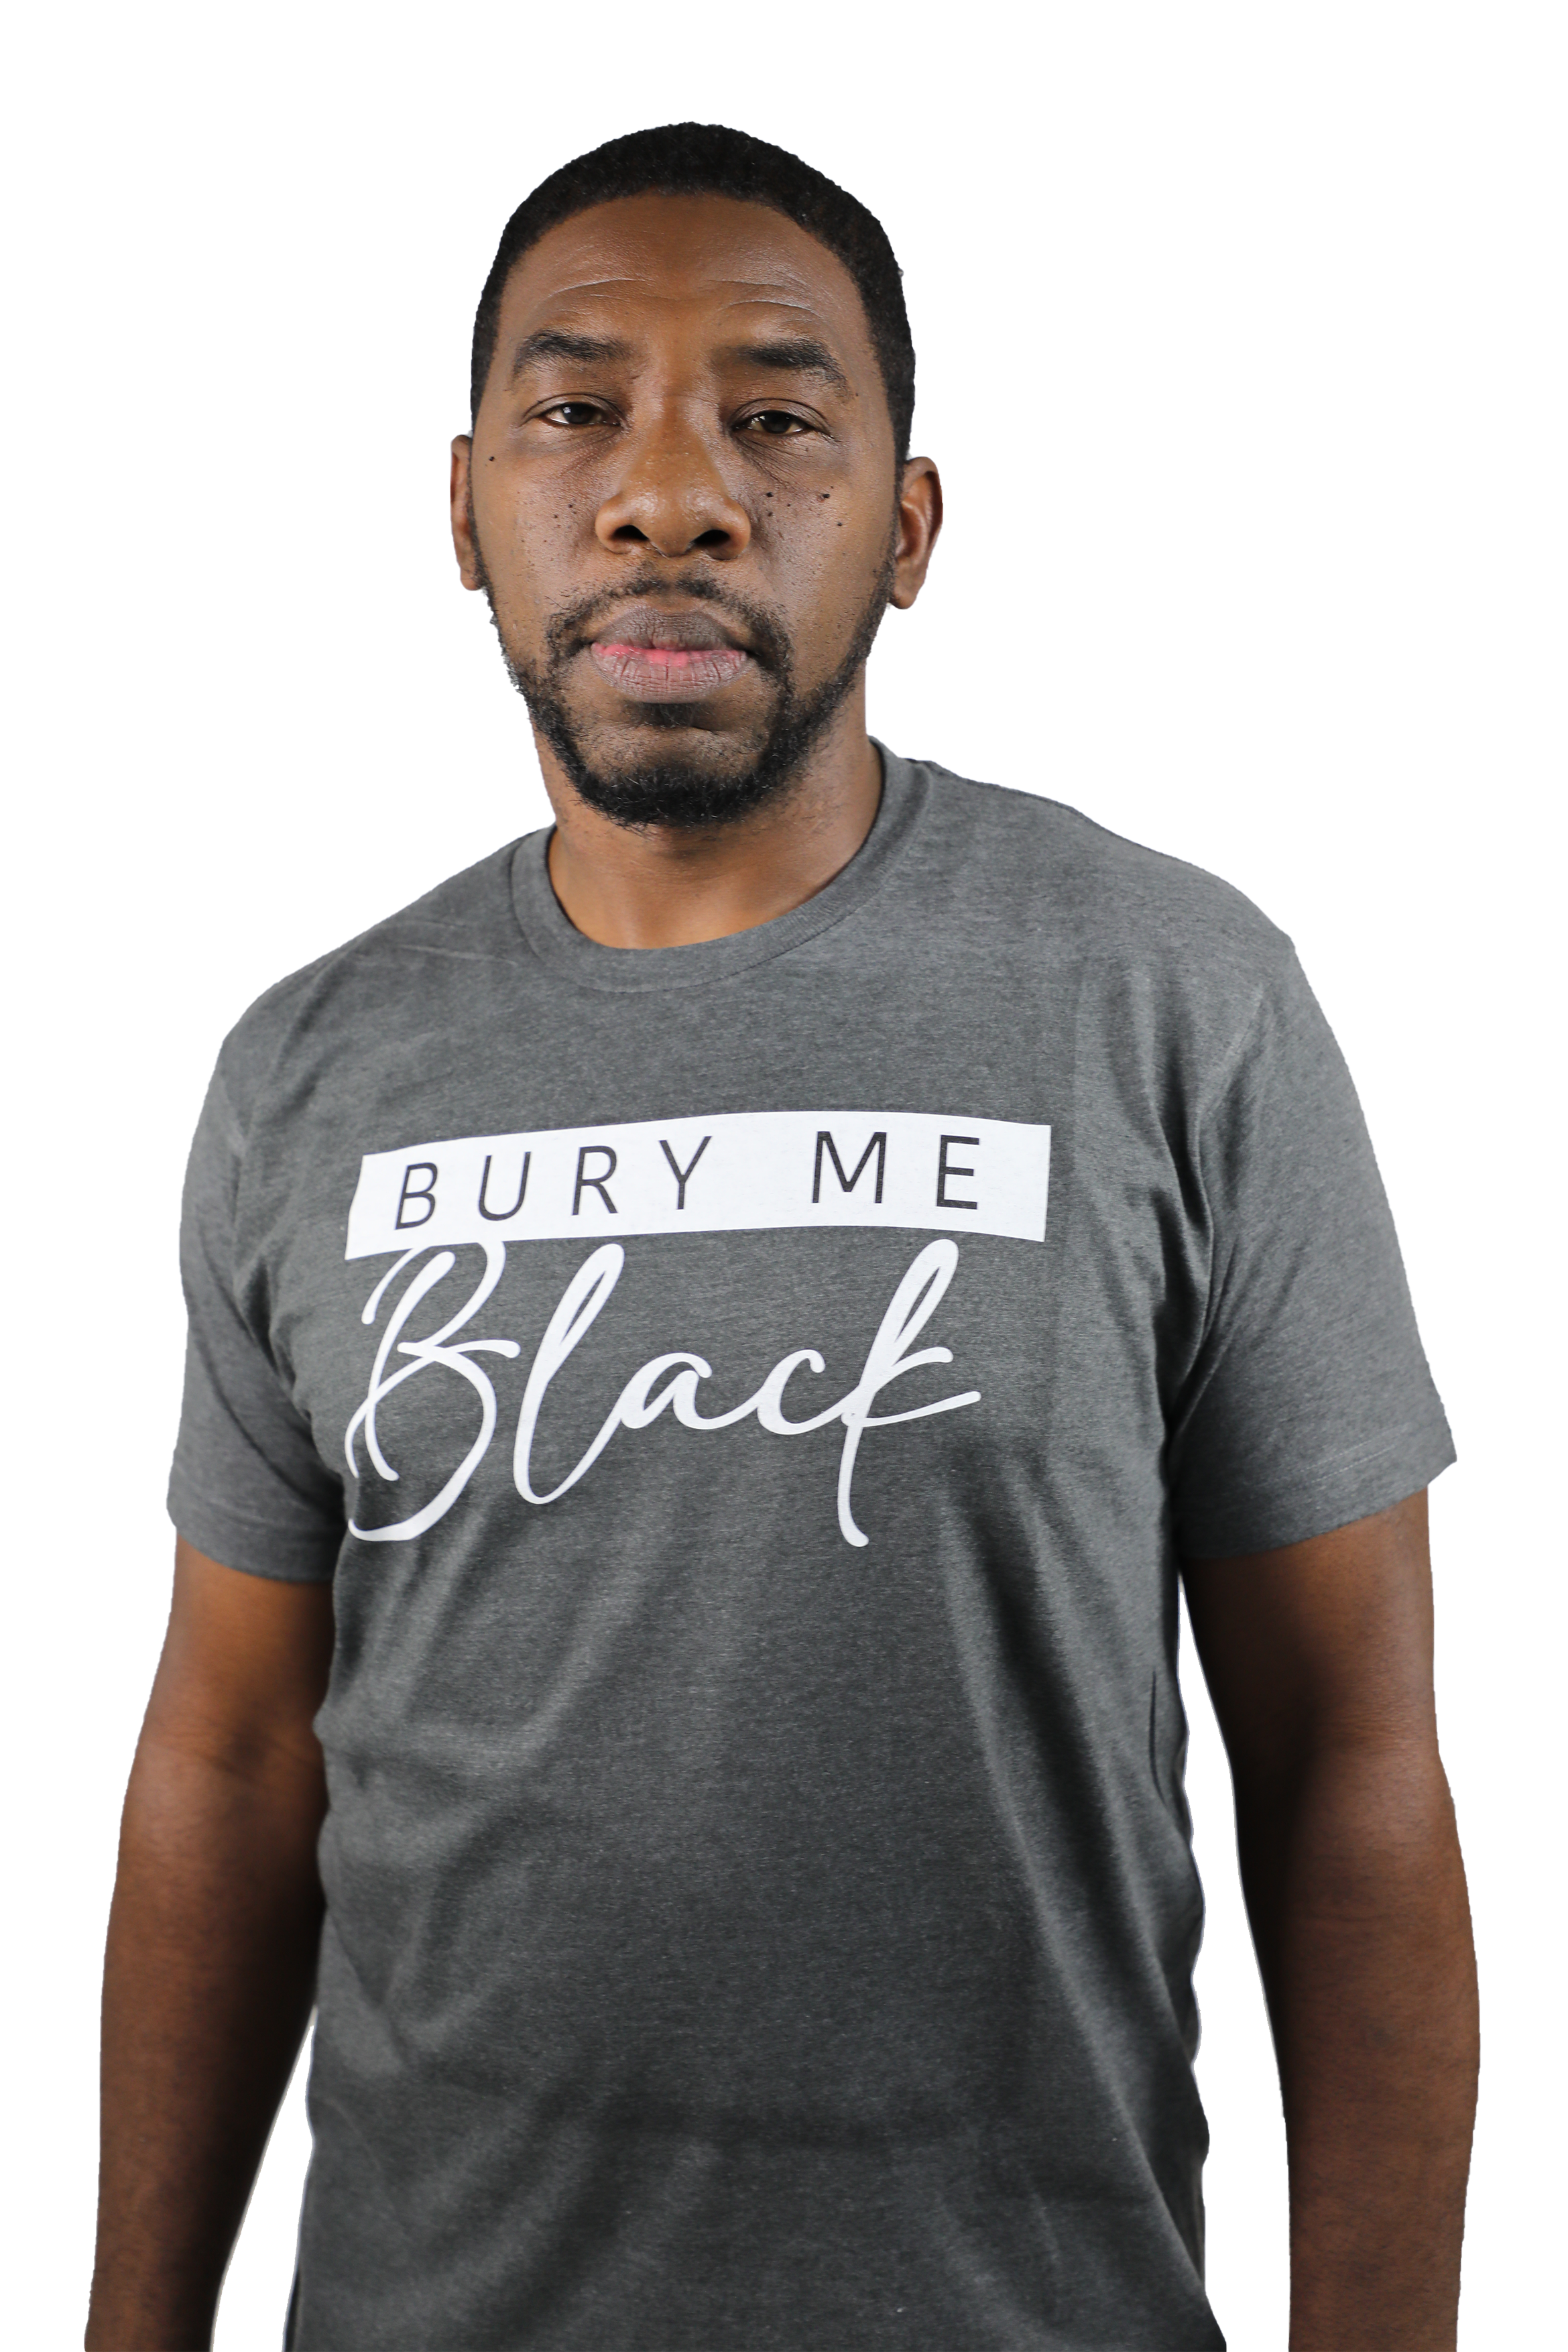 Bury Me Black STATEMENT T-Shirt – Kapeesh